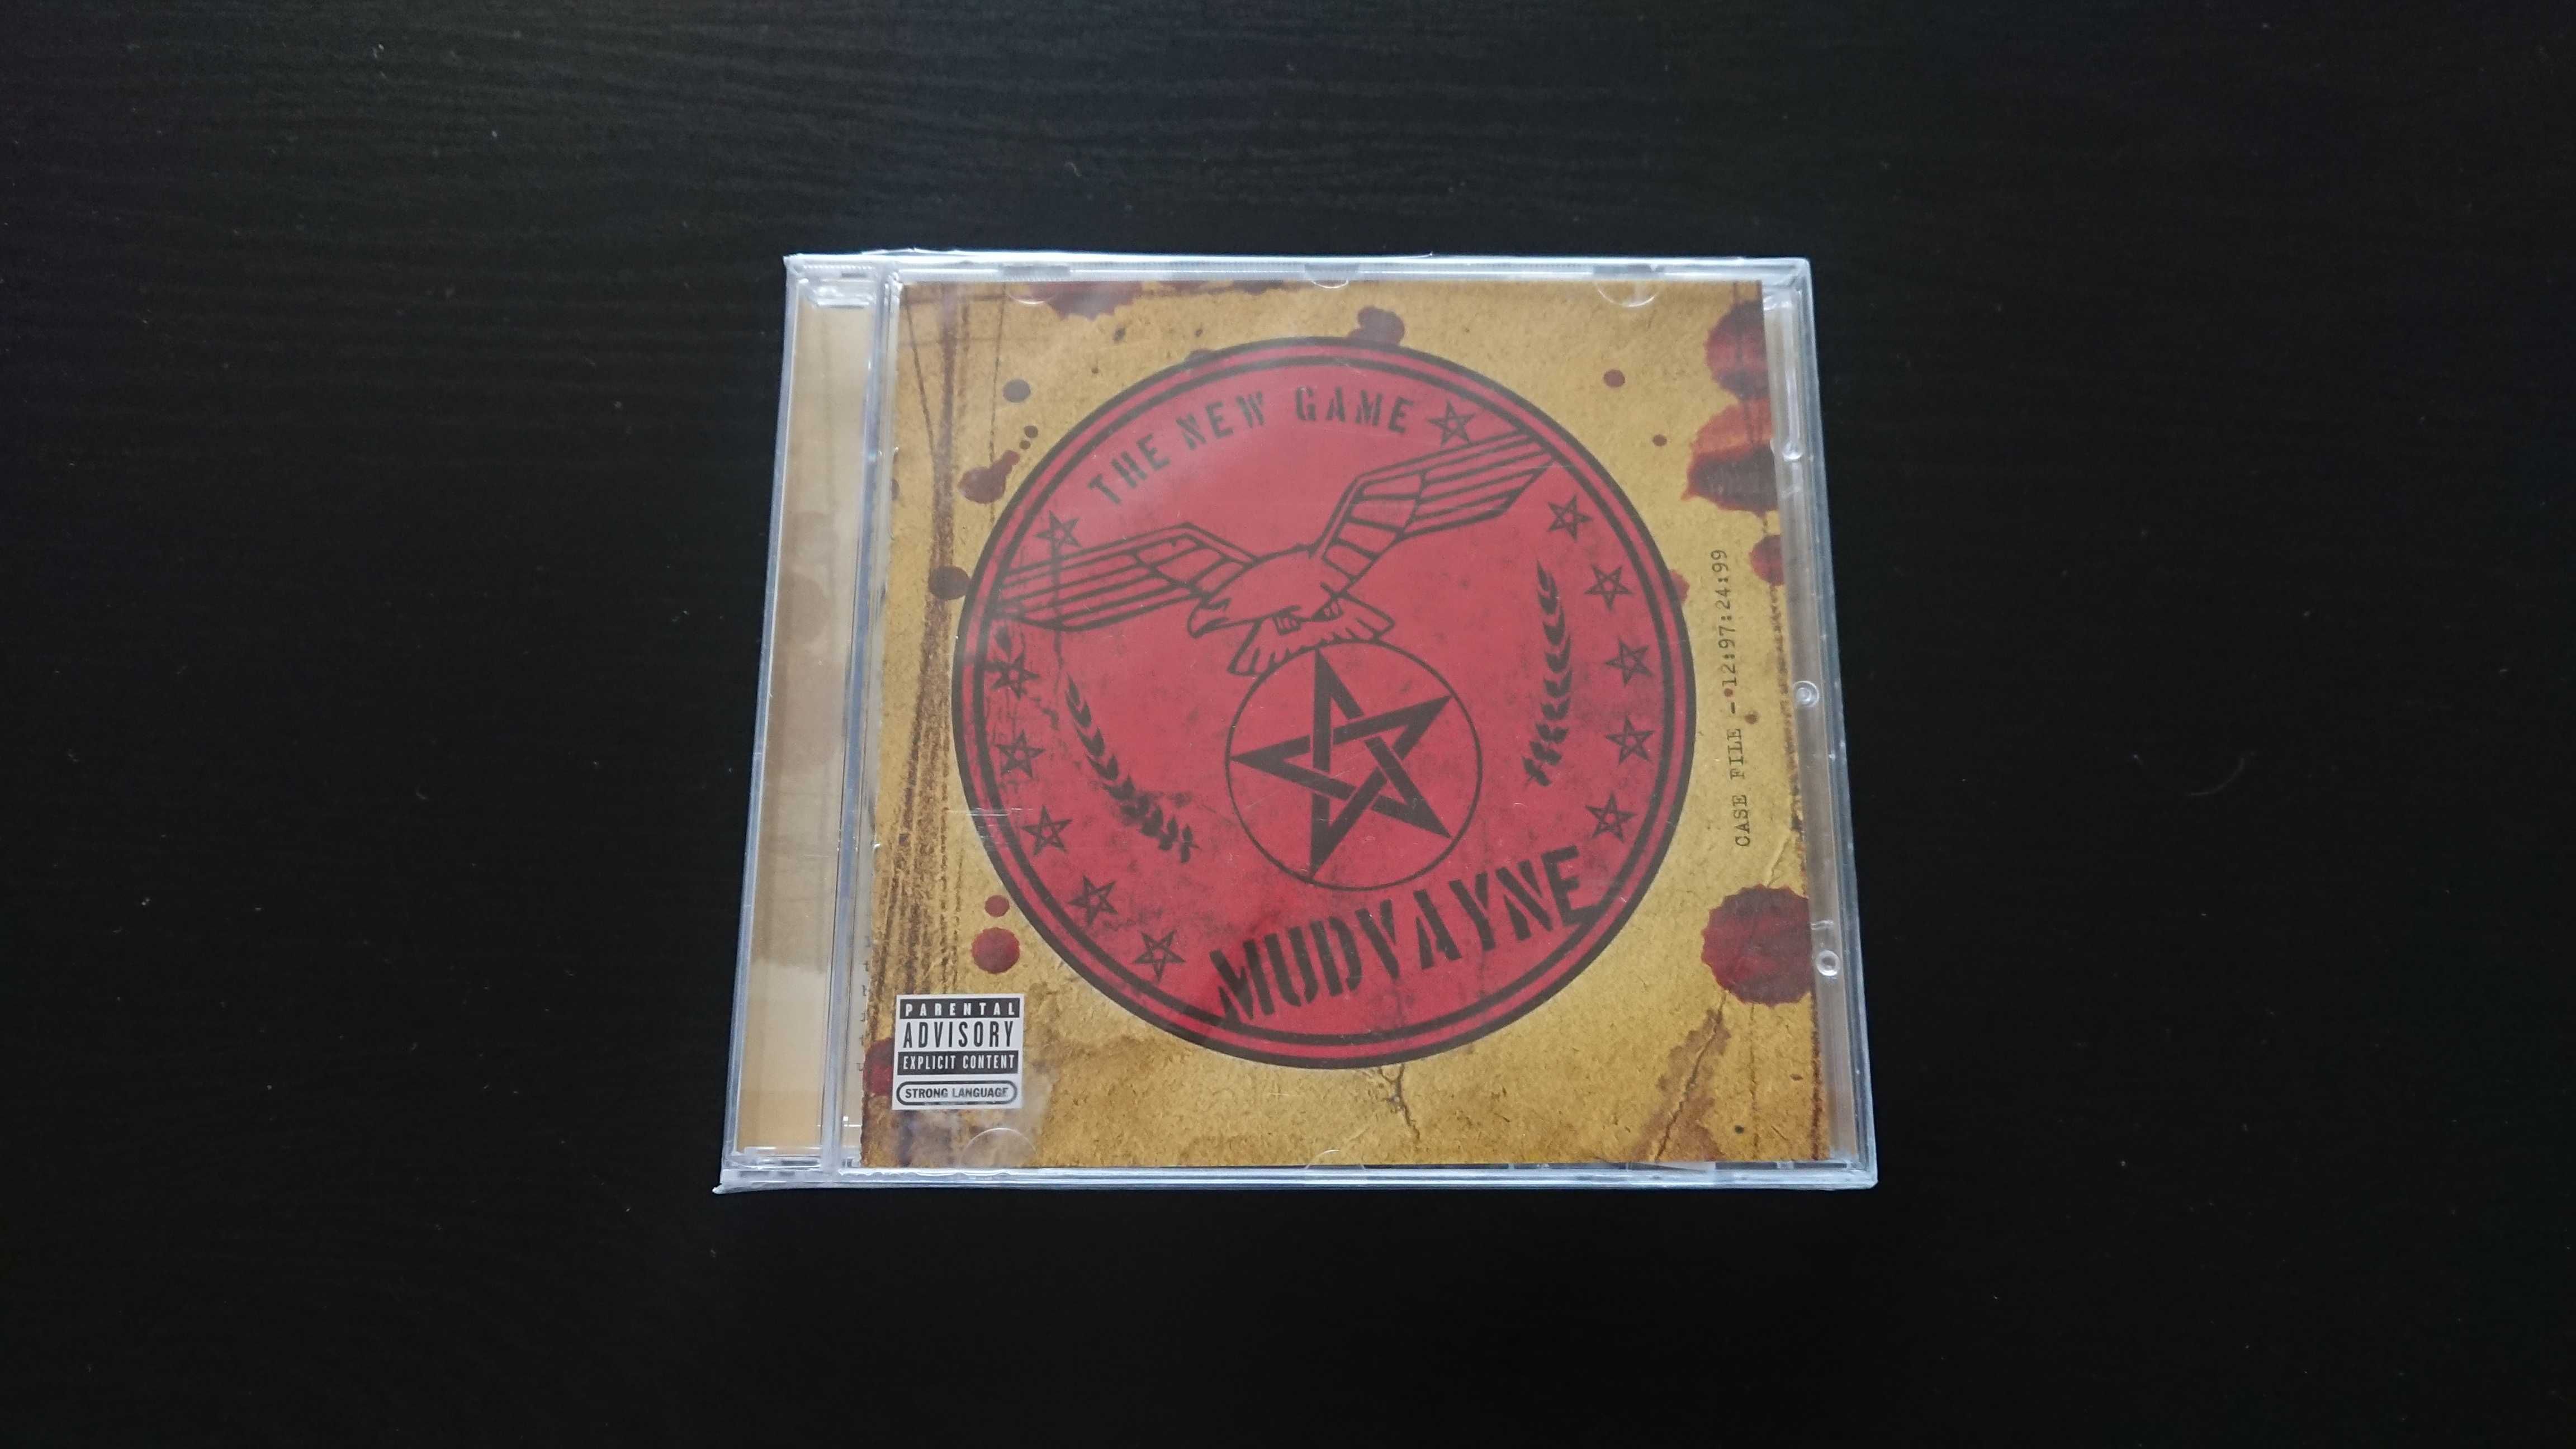 Mudvayne The New Game CD *NOWA* 2008 Clean Edit USA Folia EPIC UNIKAT